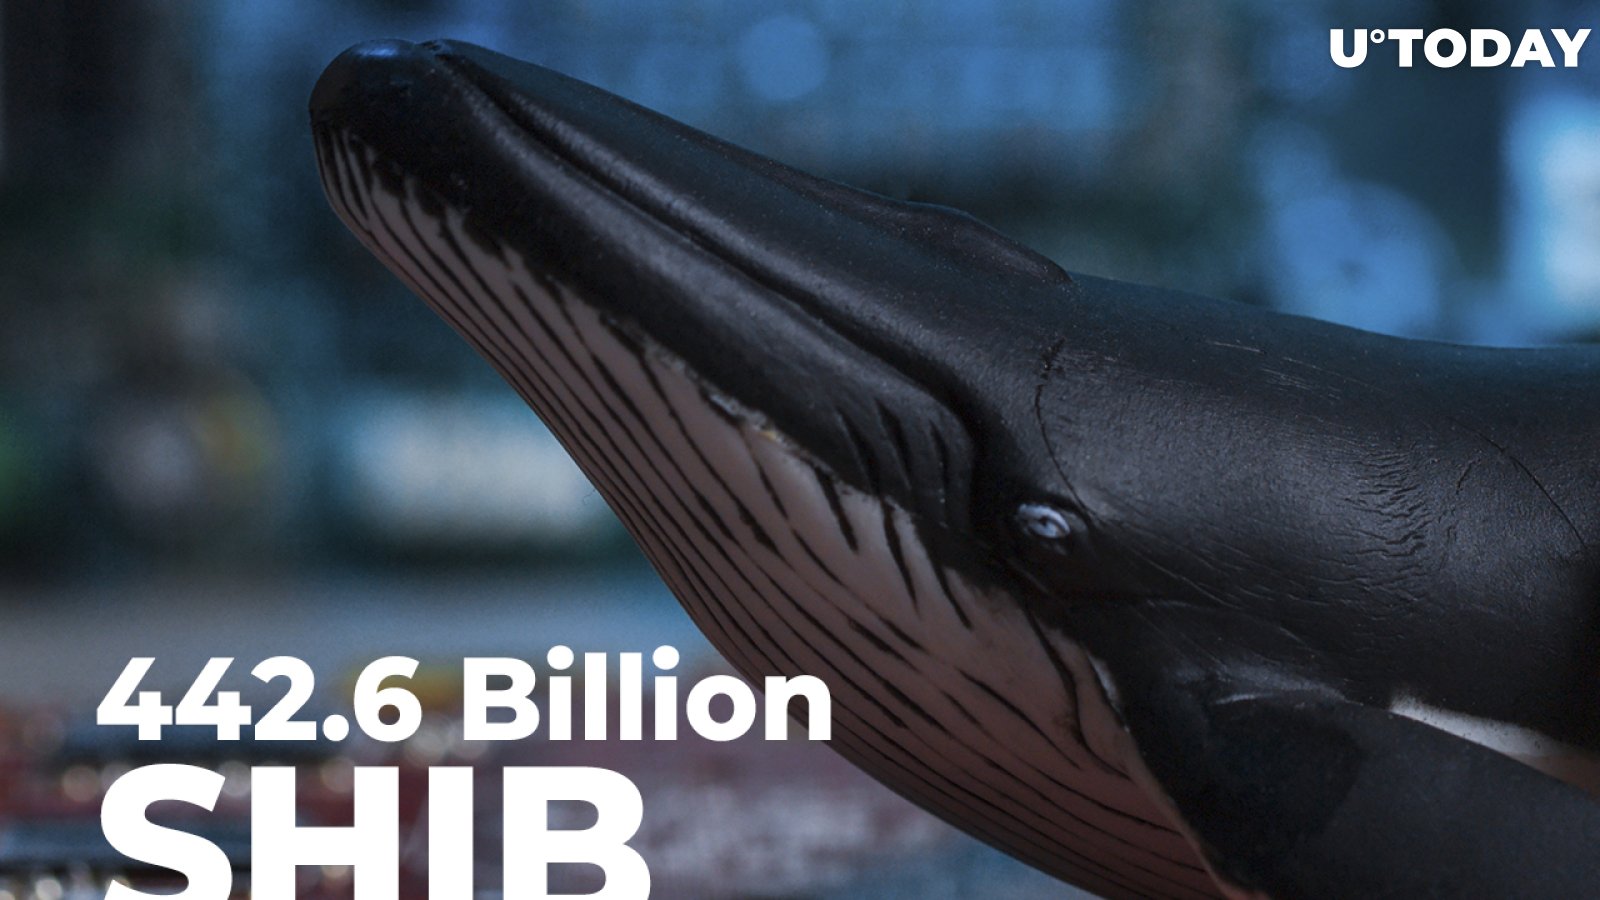 SHIB Whale Buys 442.6 Billion Shiba Inu in Single Transfer: Details